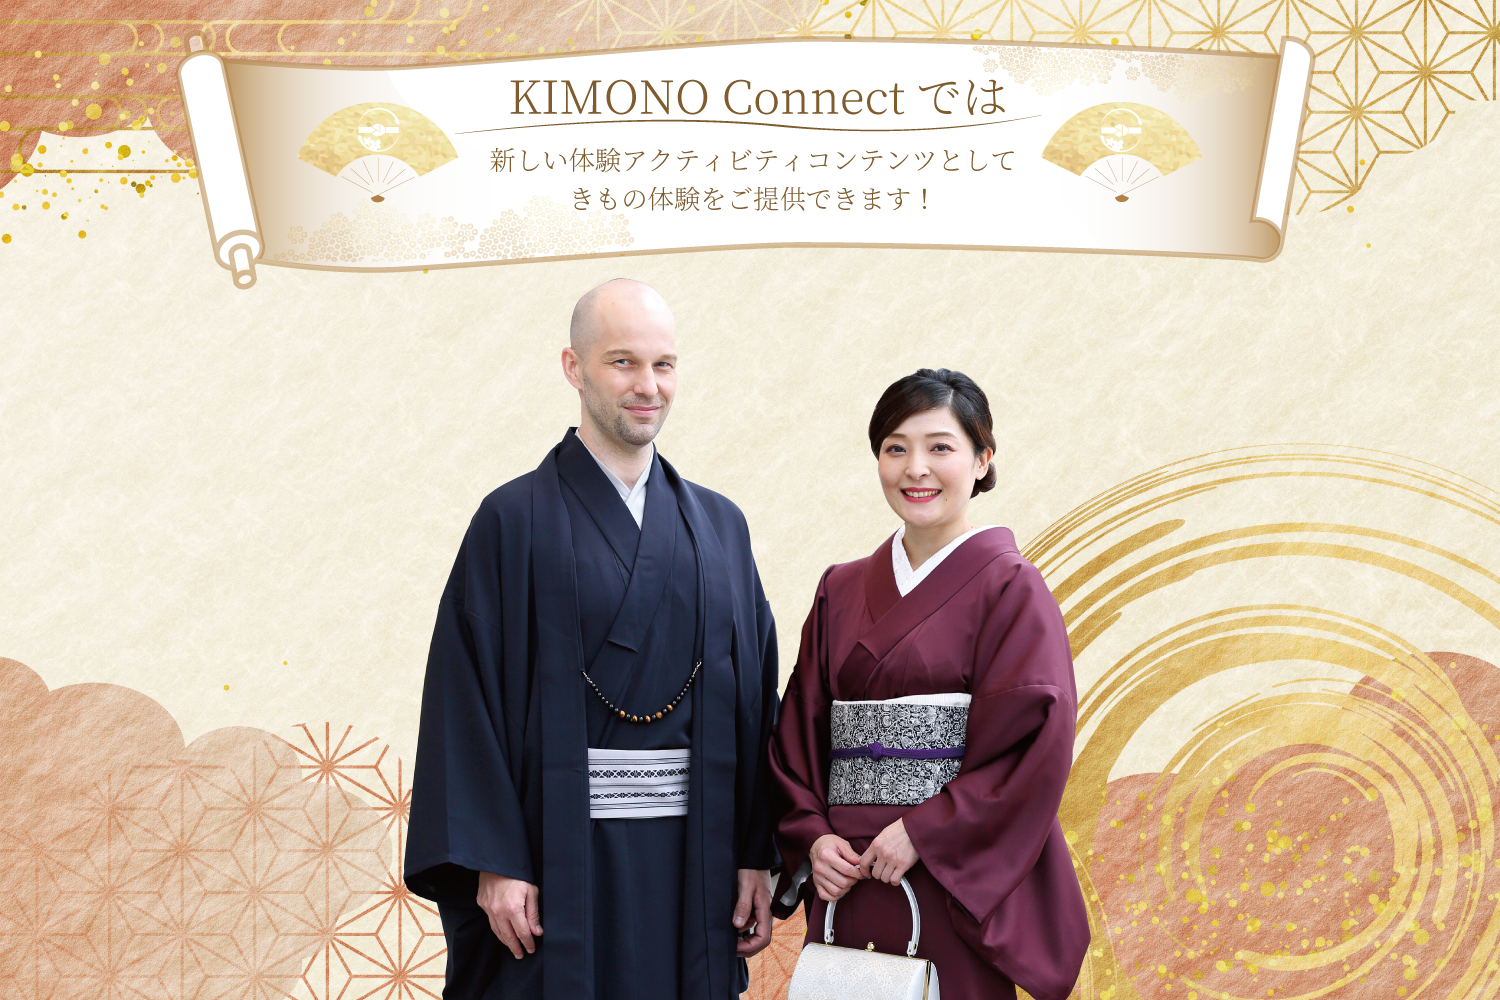 KIMONO Connectでは、新しい体験アクティビティコンテンツとして、新しい体験アクティビティコンテンツとして